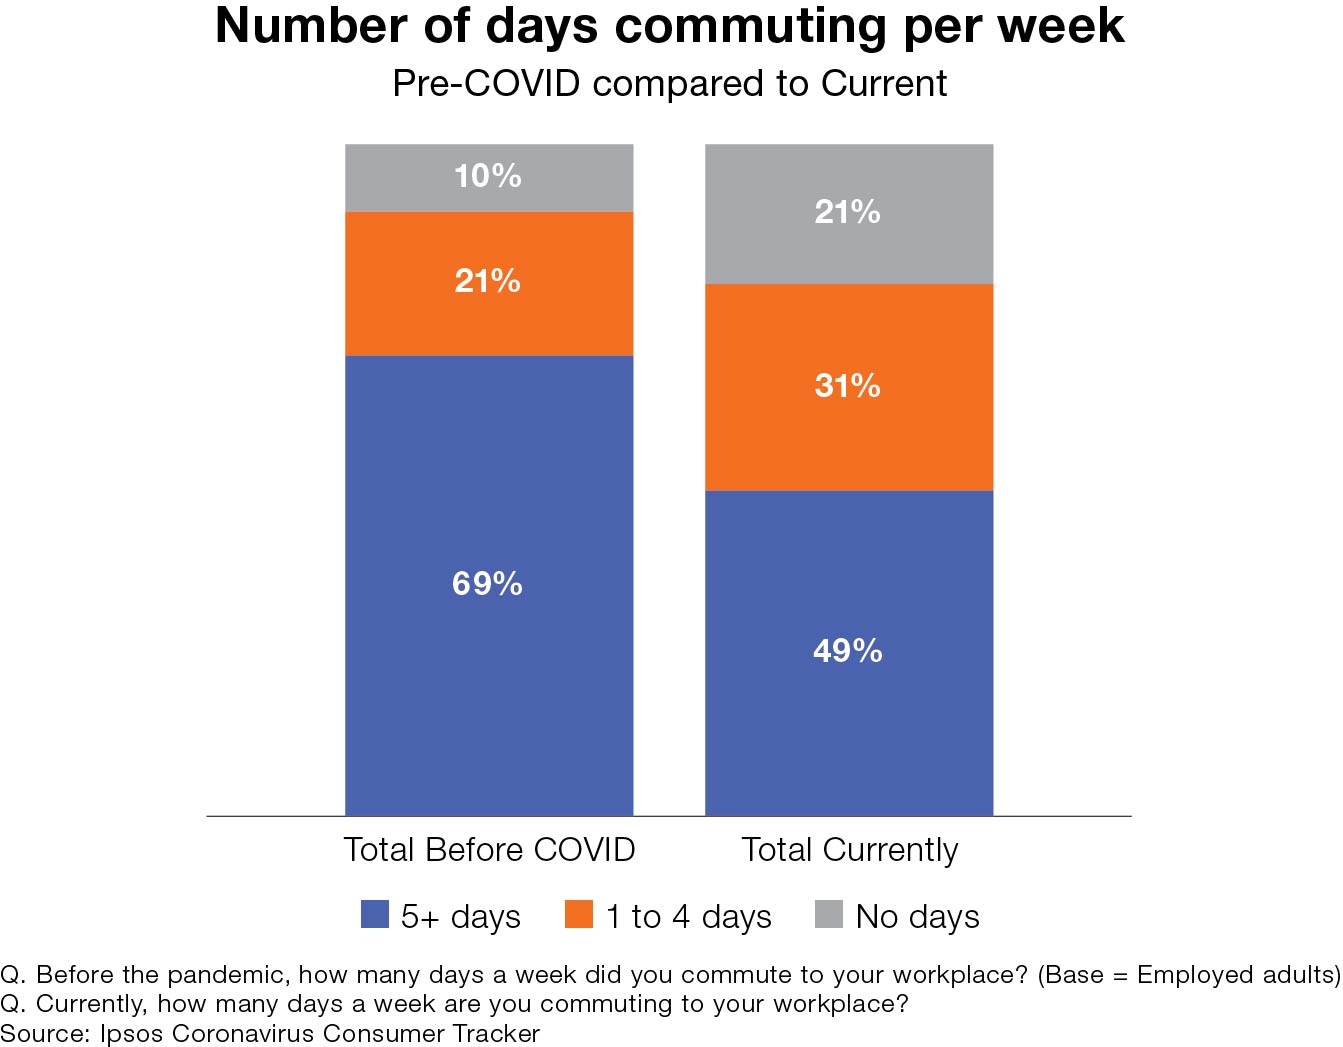 Number of days per week commuting 